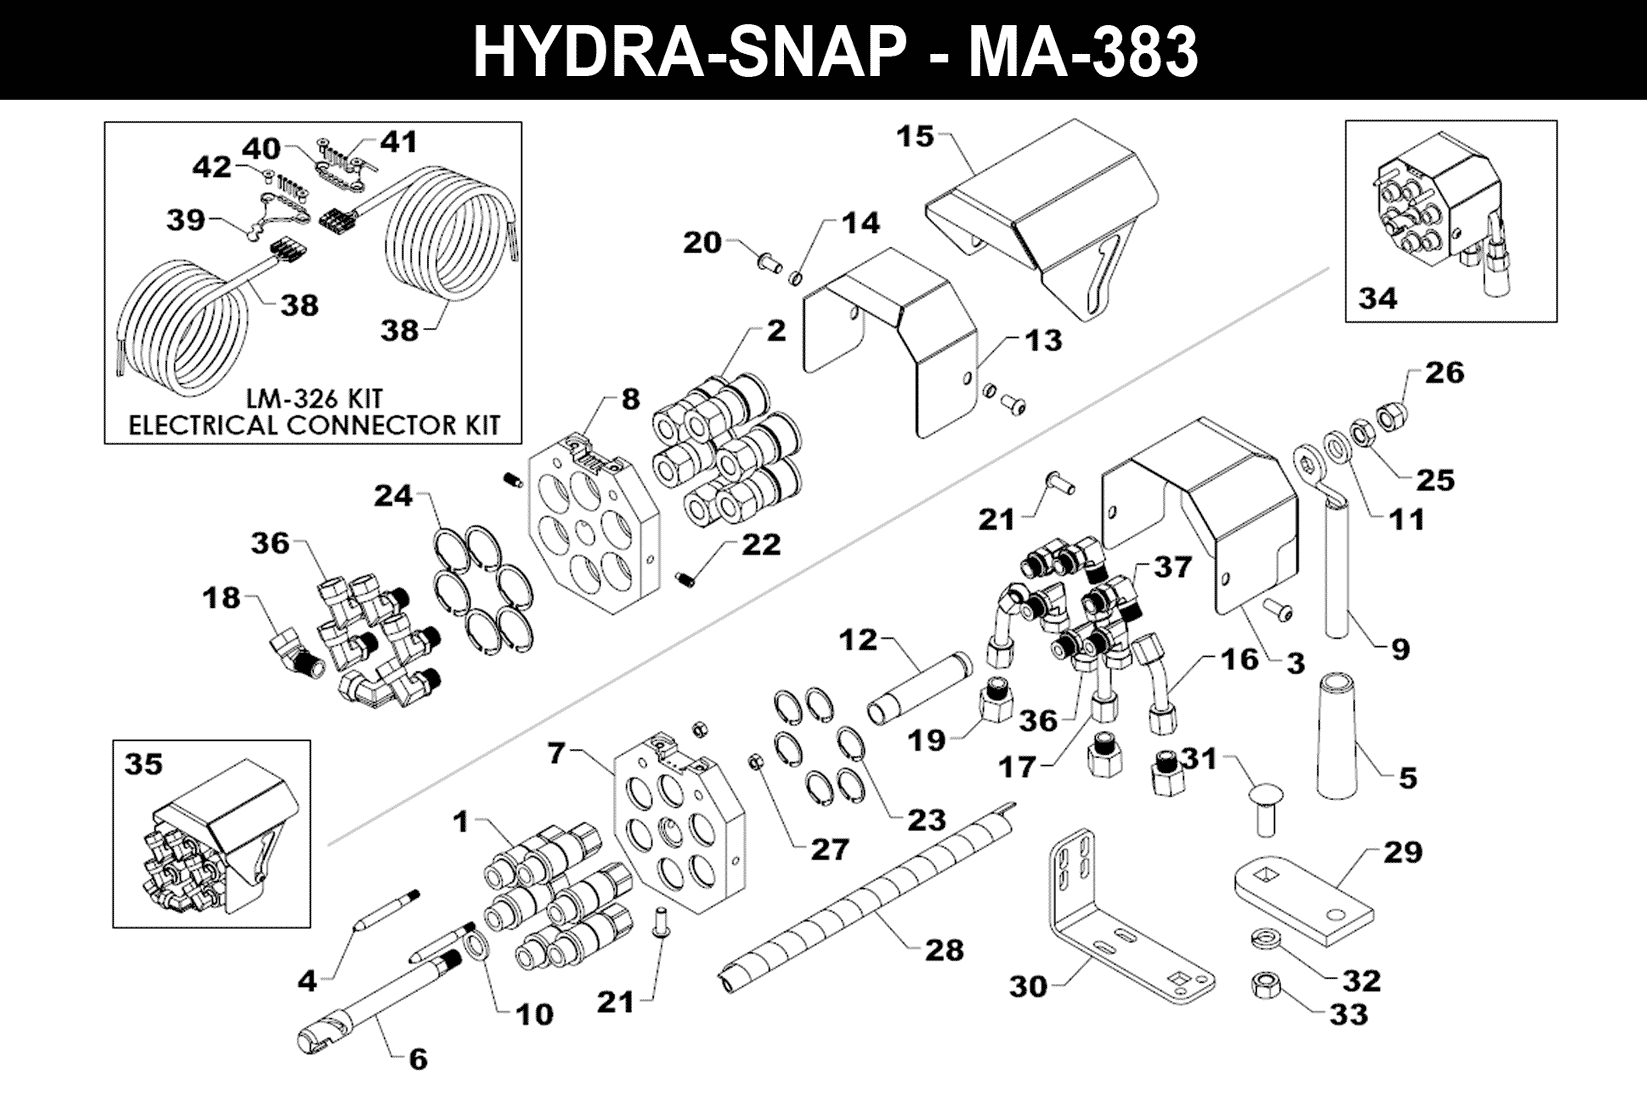 Hydra-Snap™ - MA-383